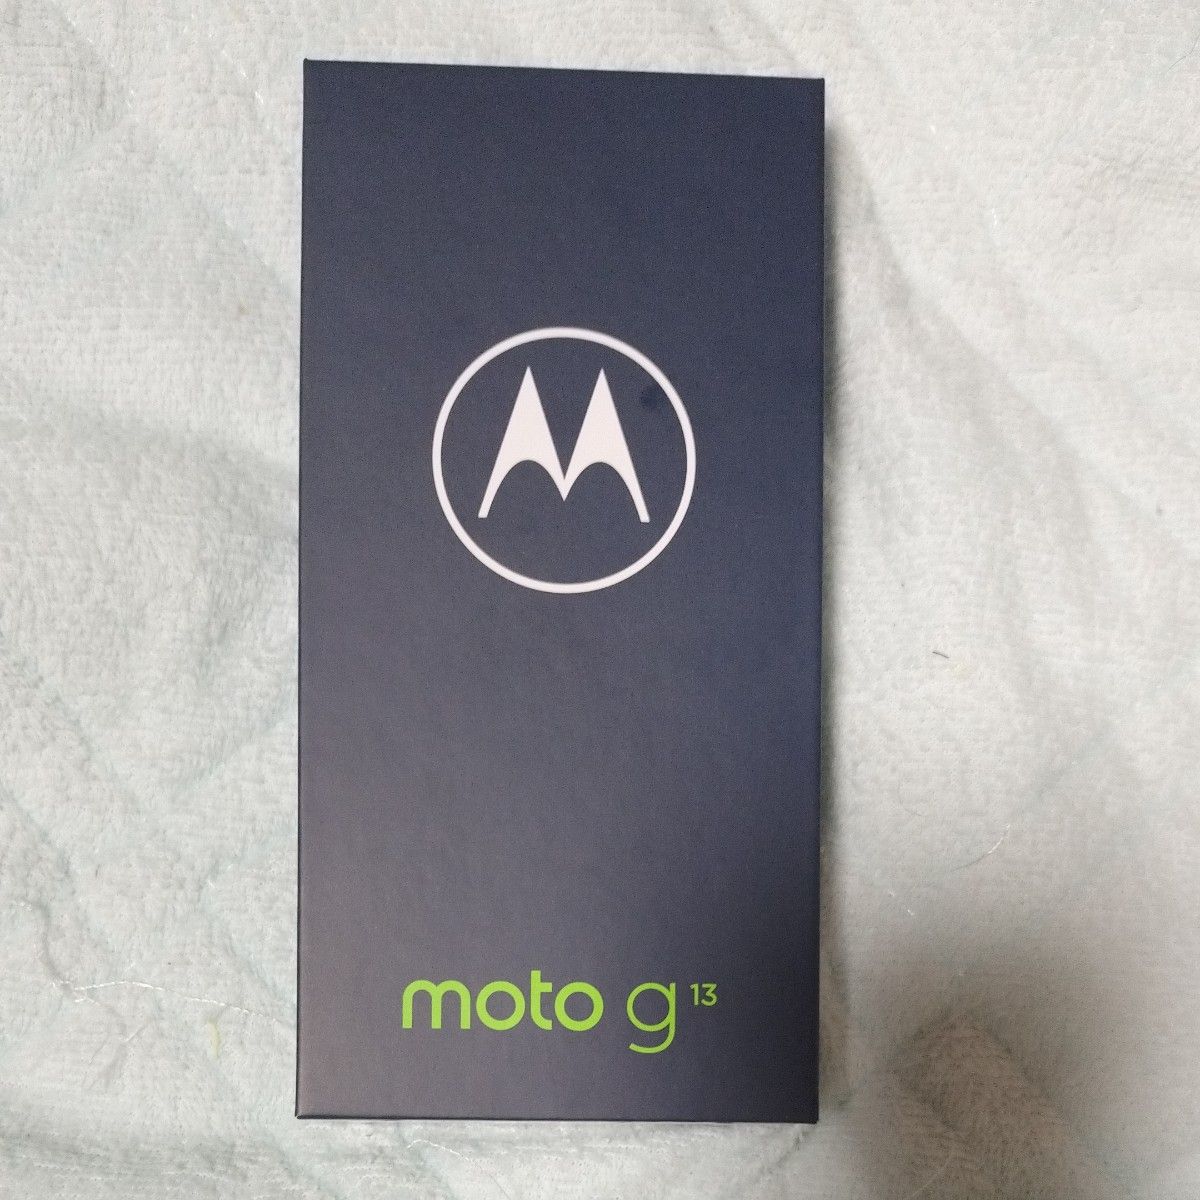 motog13 SIMフリー g13 マットチャコール ブラック モトローラ Motorola motorola